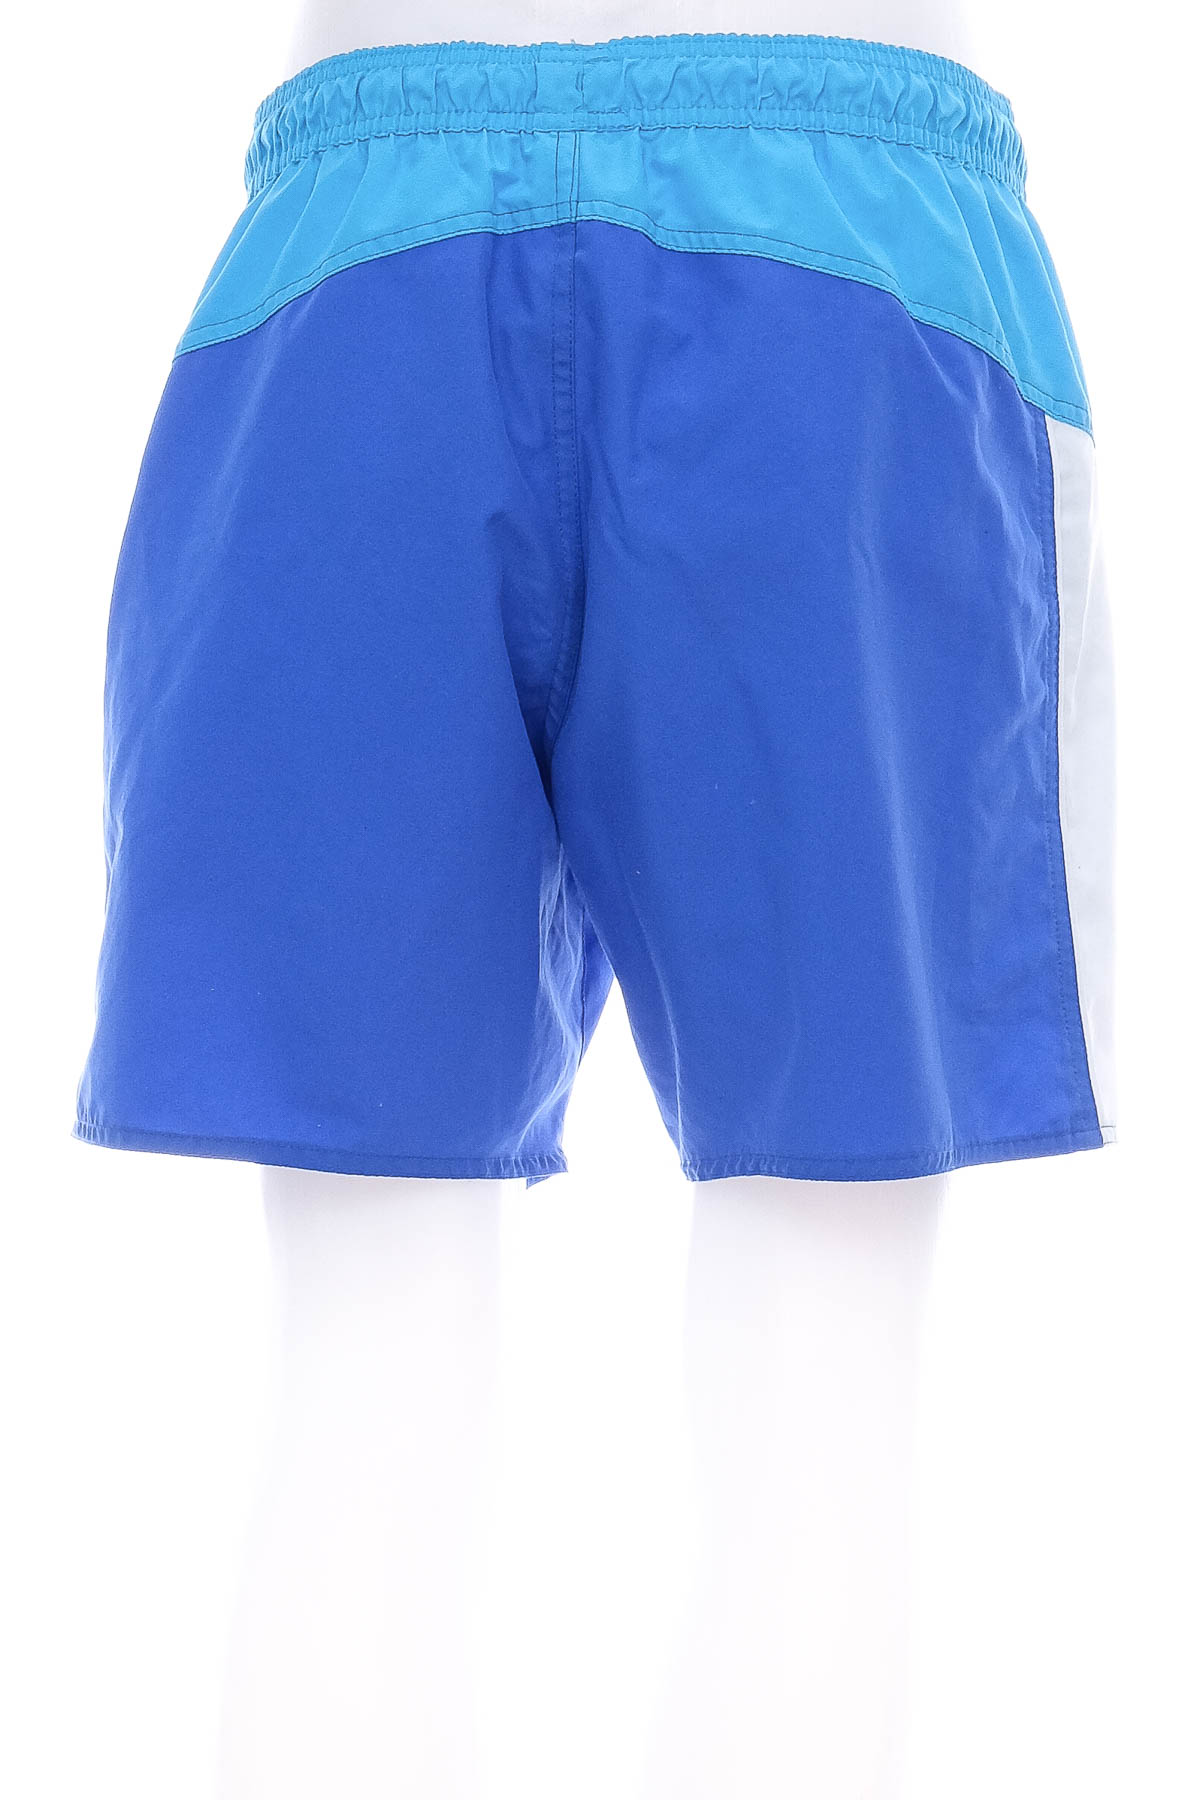 Men's shorts - Speedo - 1